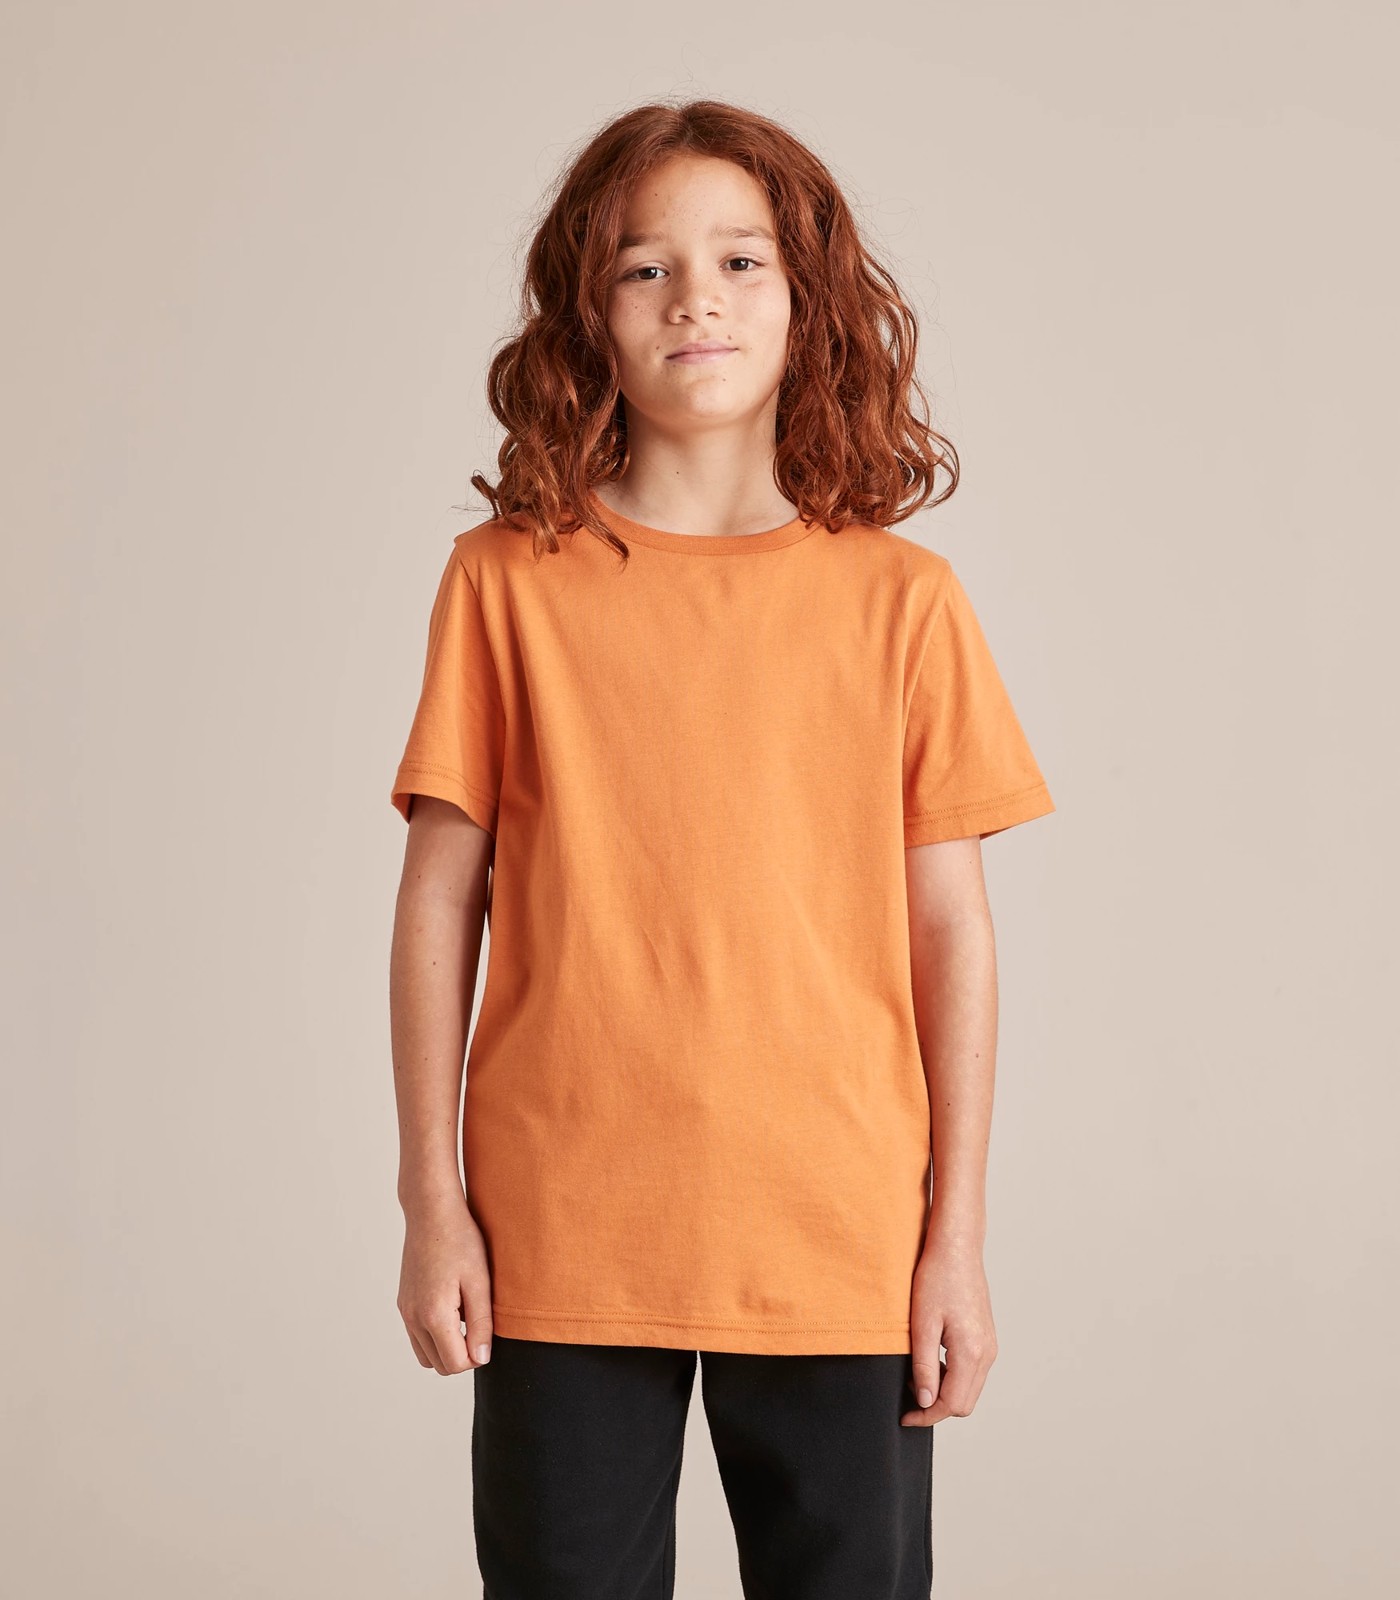 Sleeve School Short T-shirts Cotton | Target Australia